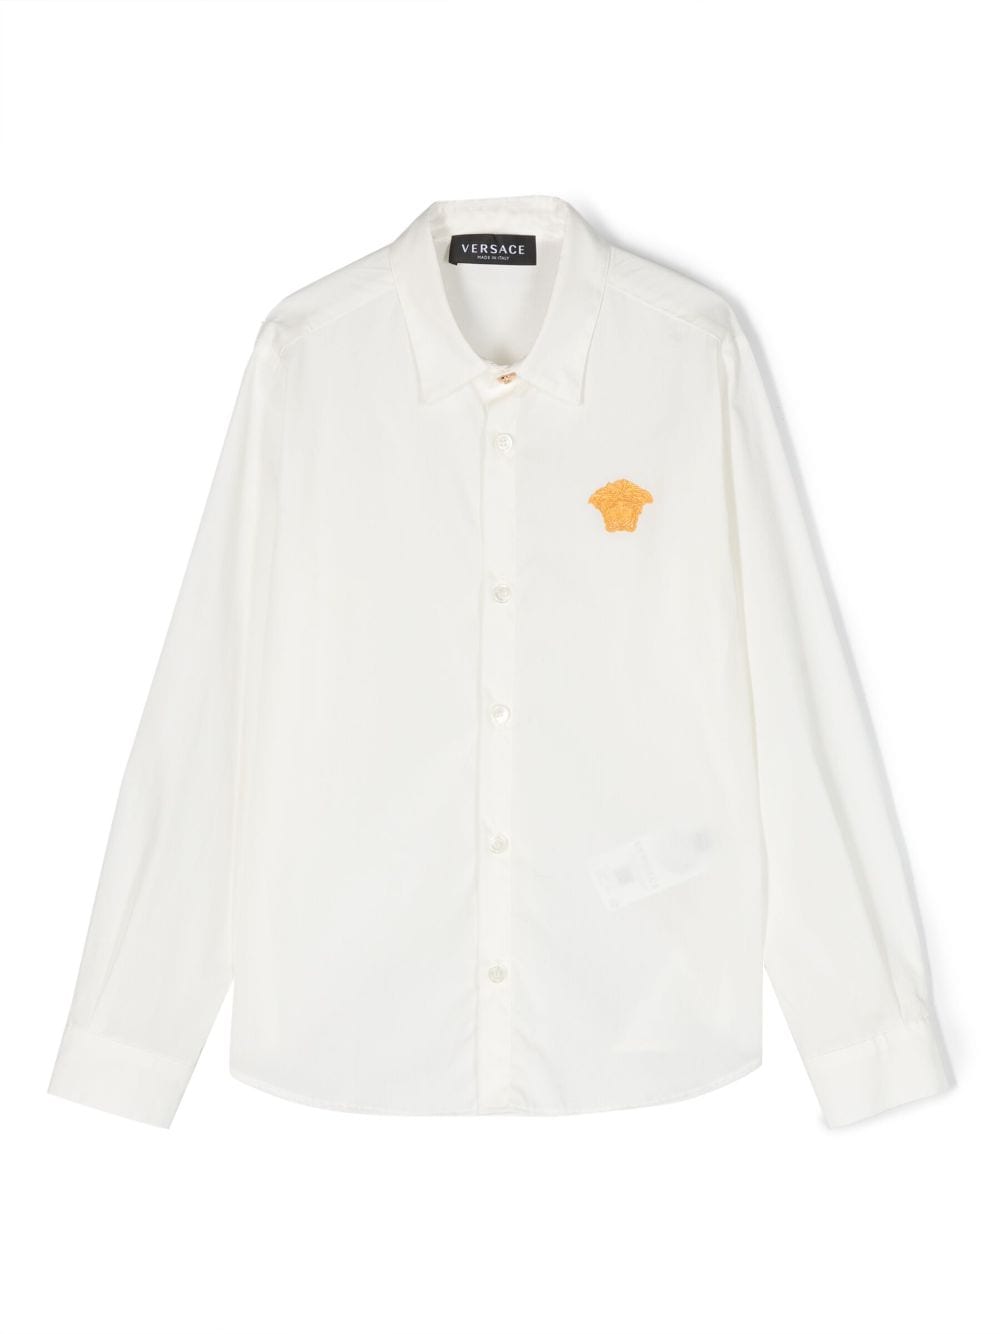 White cotton poplin boy VERSACE shirt | Carofiglio Junior